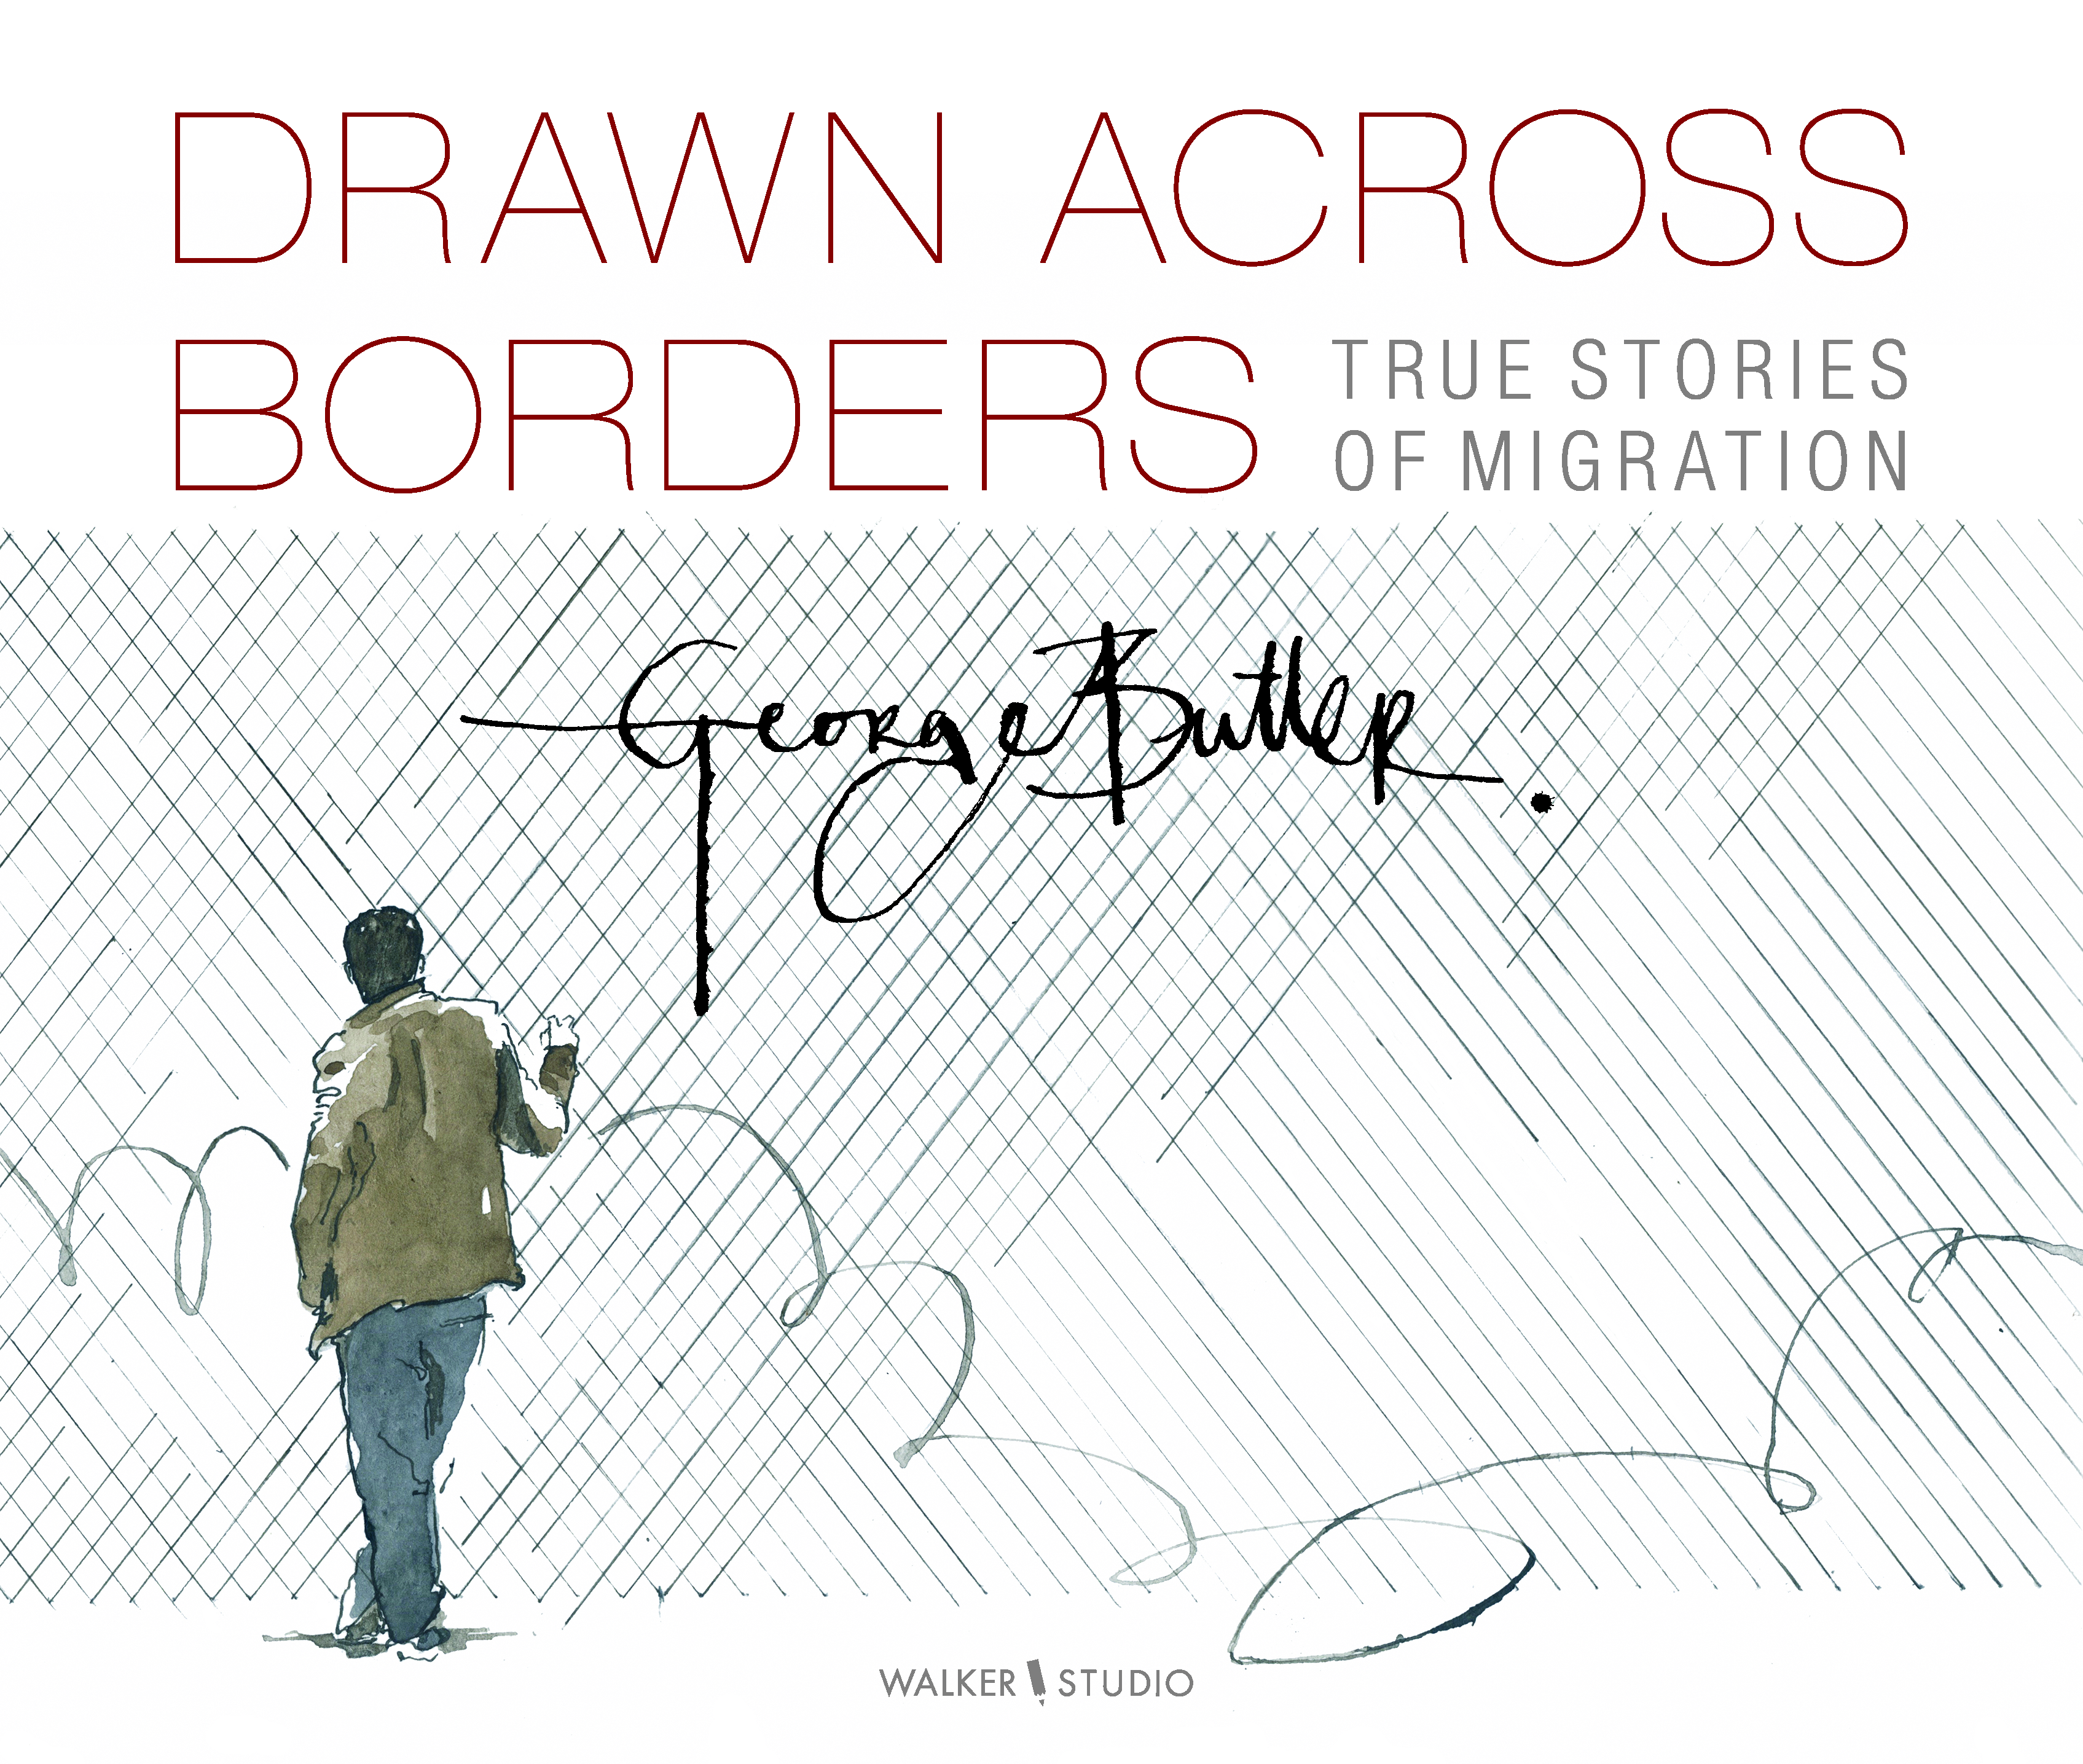 Drawn-Across-Borders-True-Stories-of-Migration